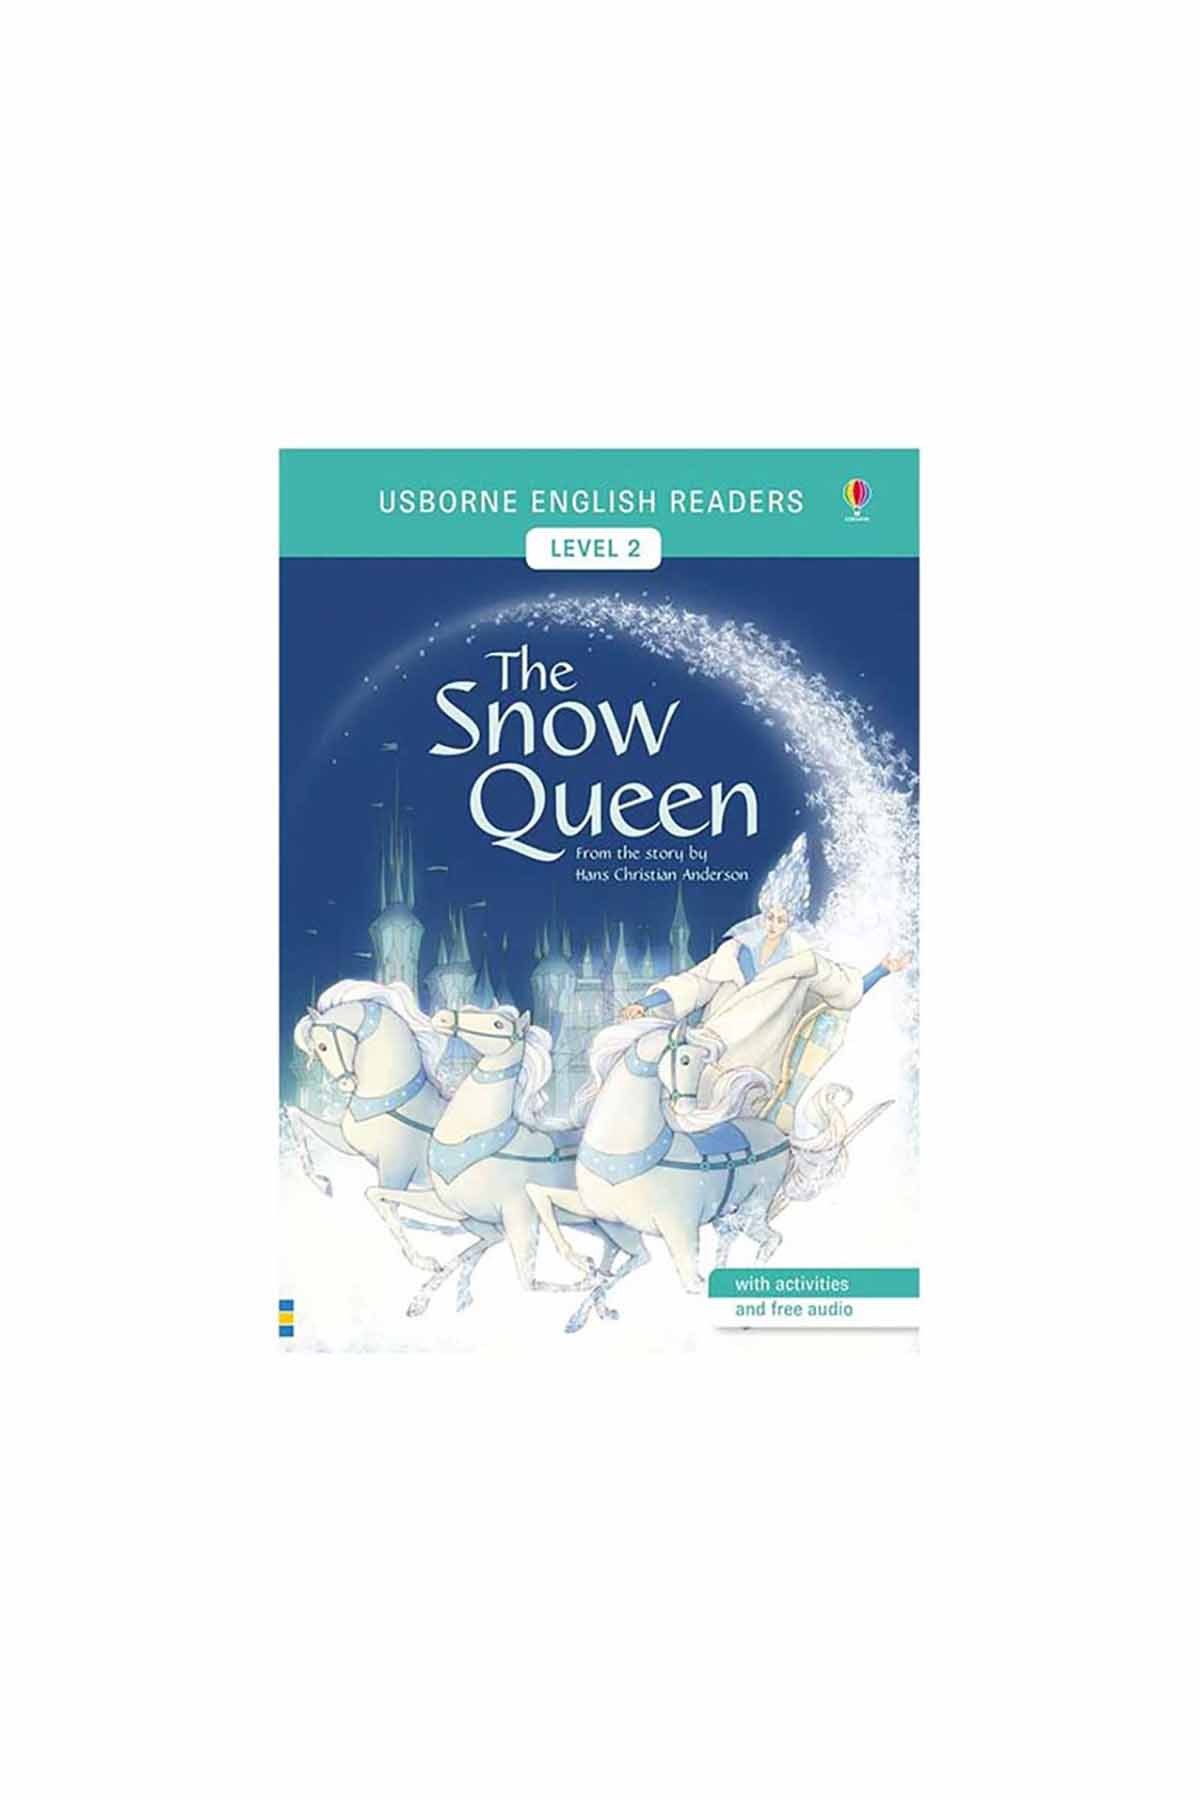 The Usborne The Snow Queen